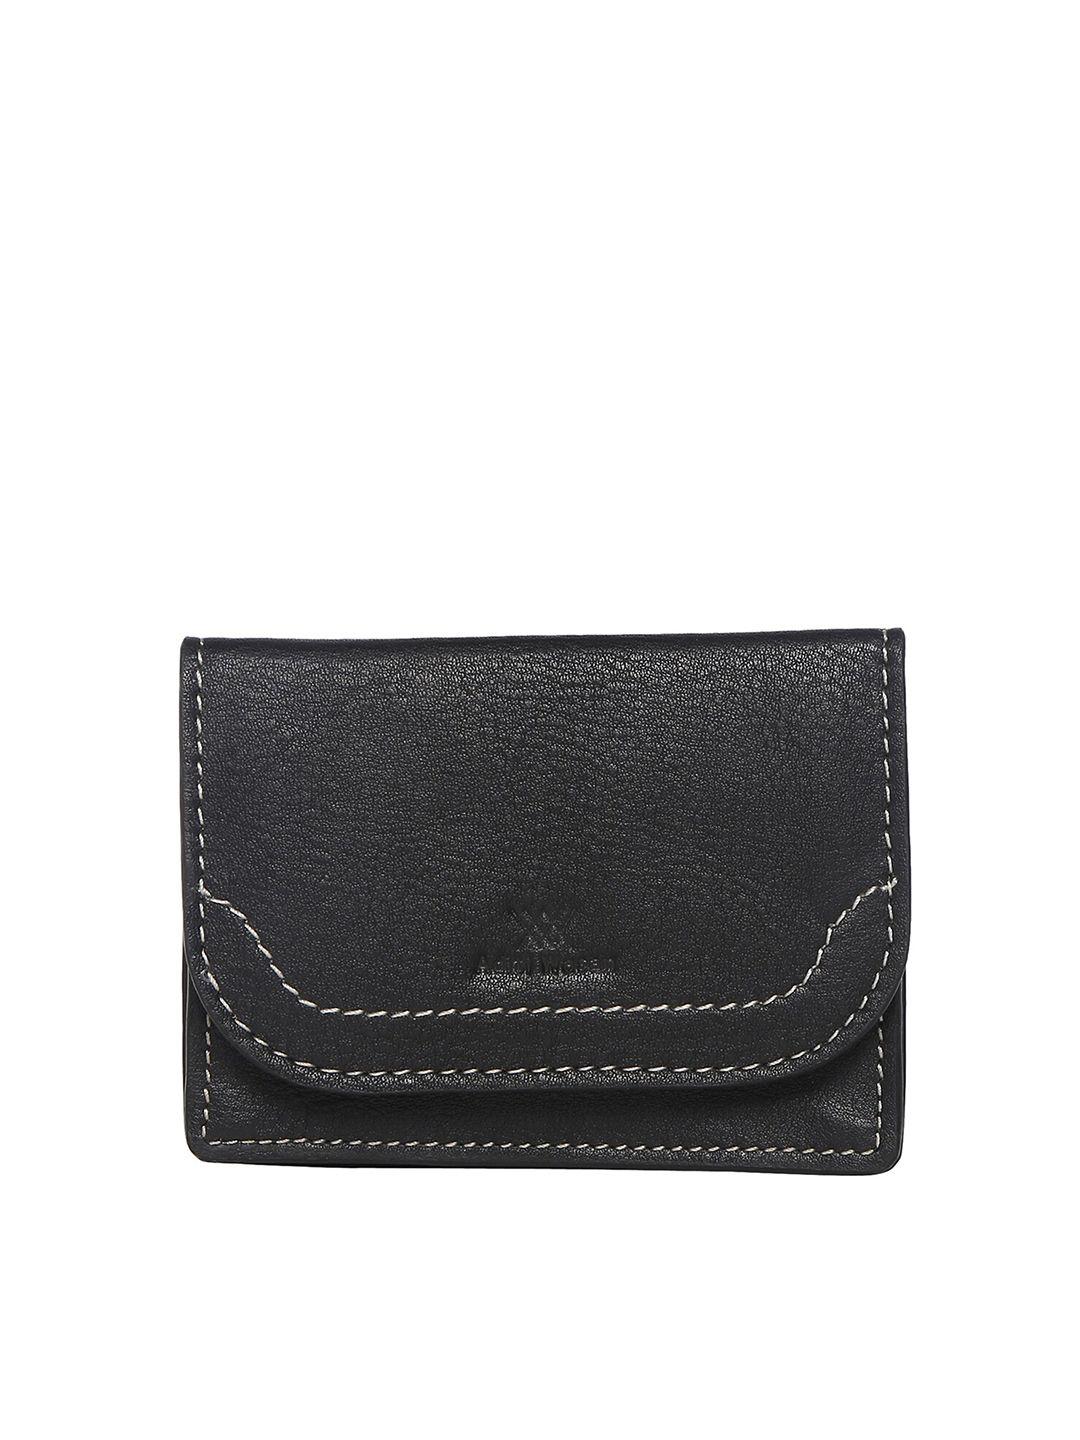 aditi wasan unisex black textured genuine leather card holder